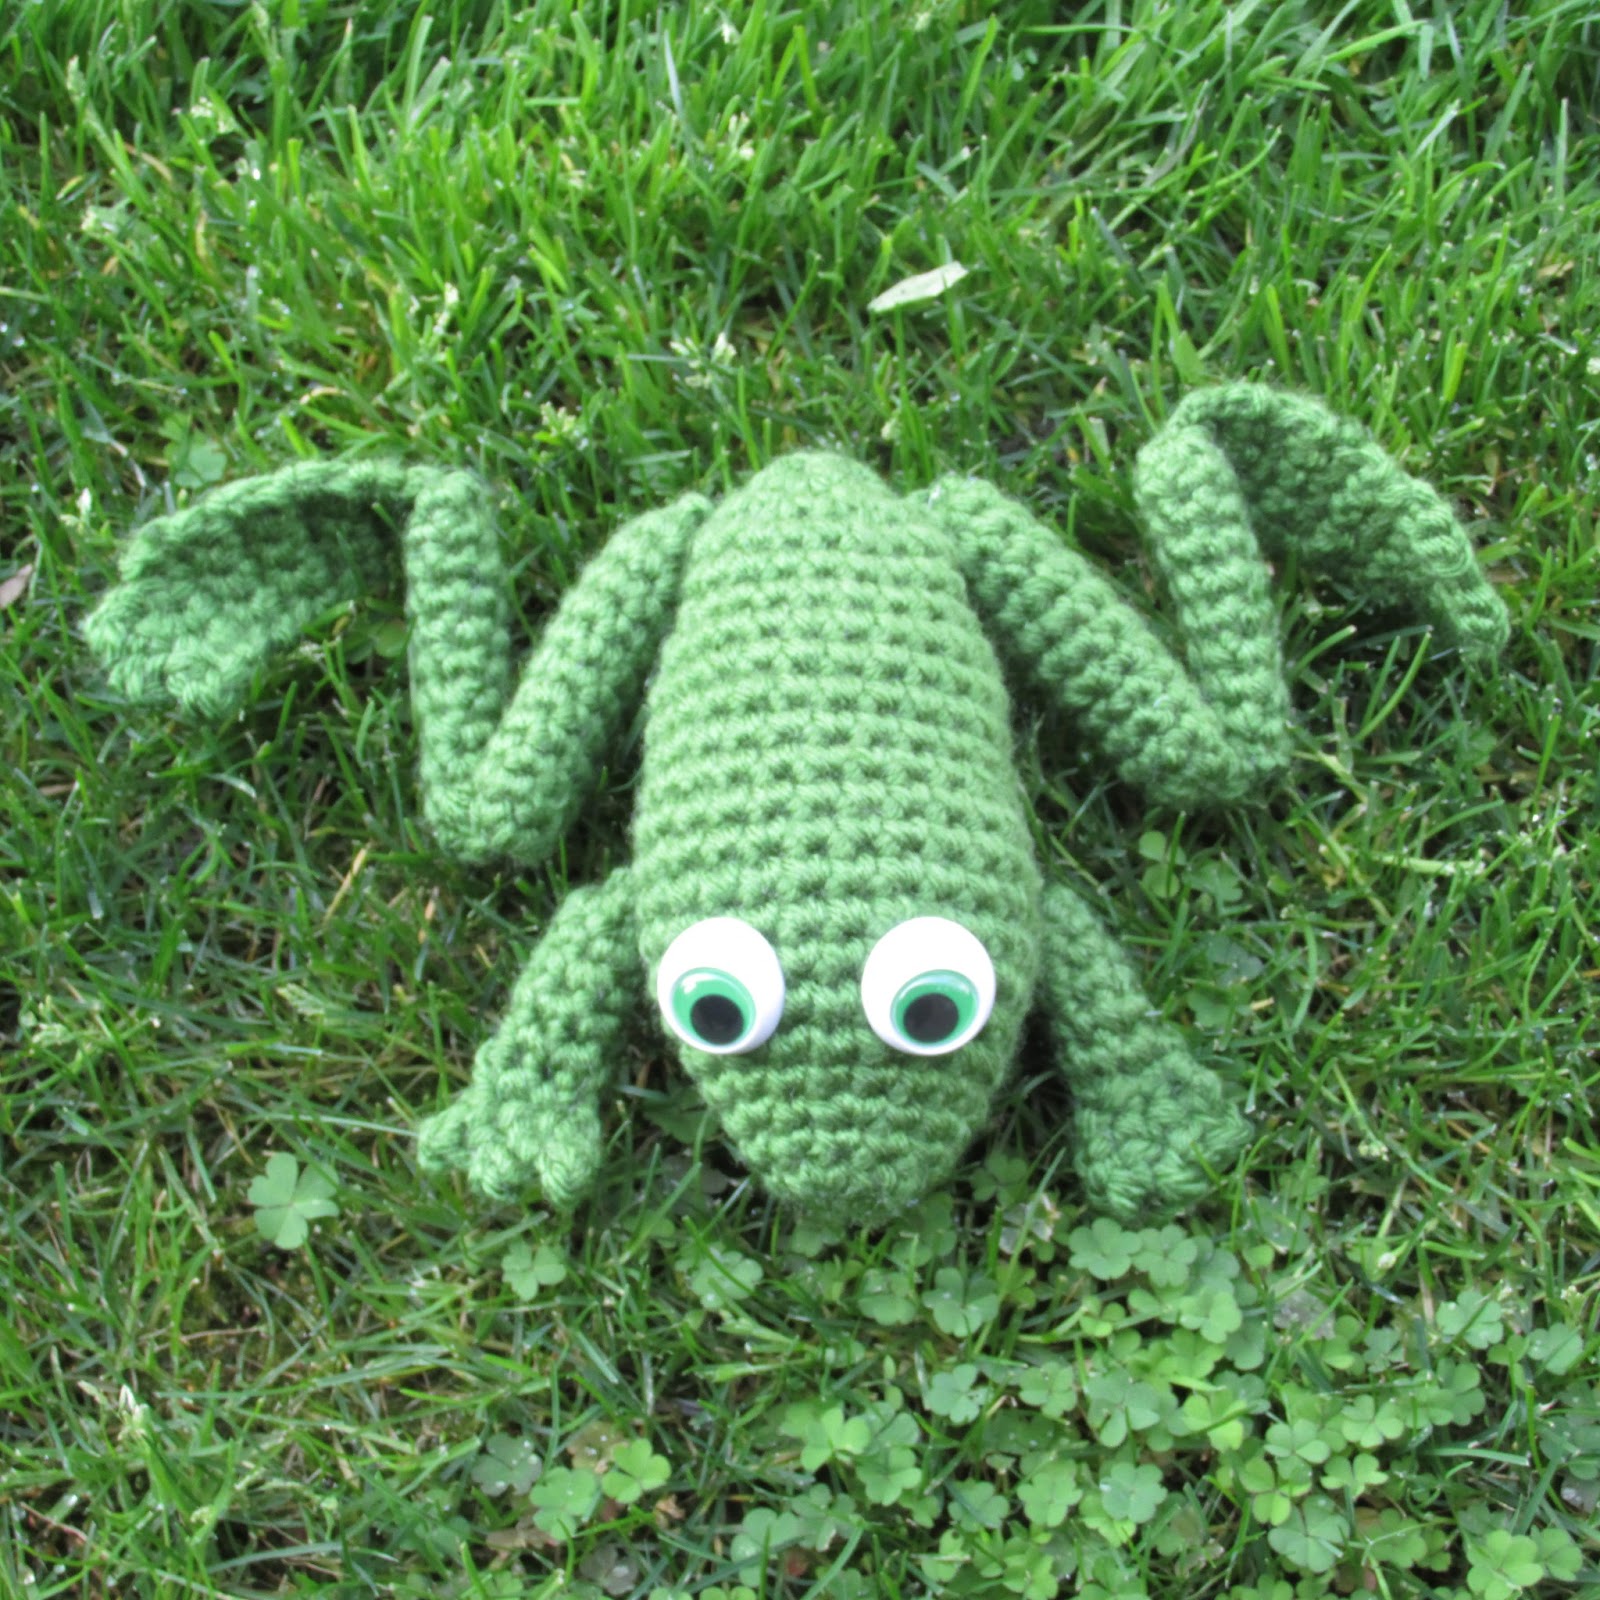 Spiderling Dreams Free Crochet Bullfrog Pattern!